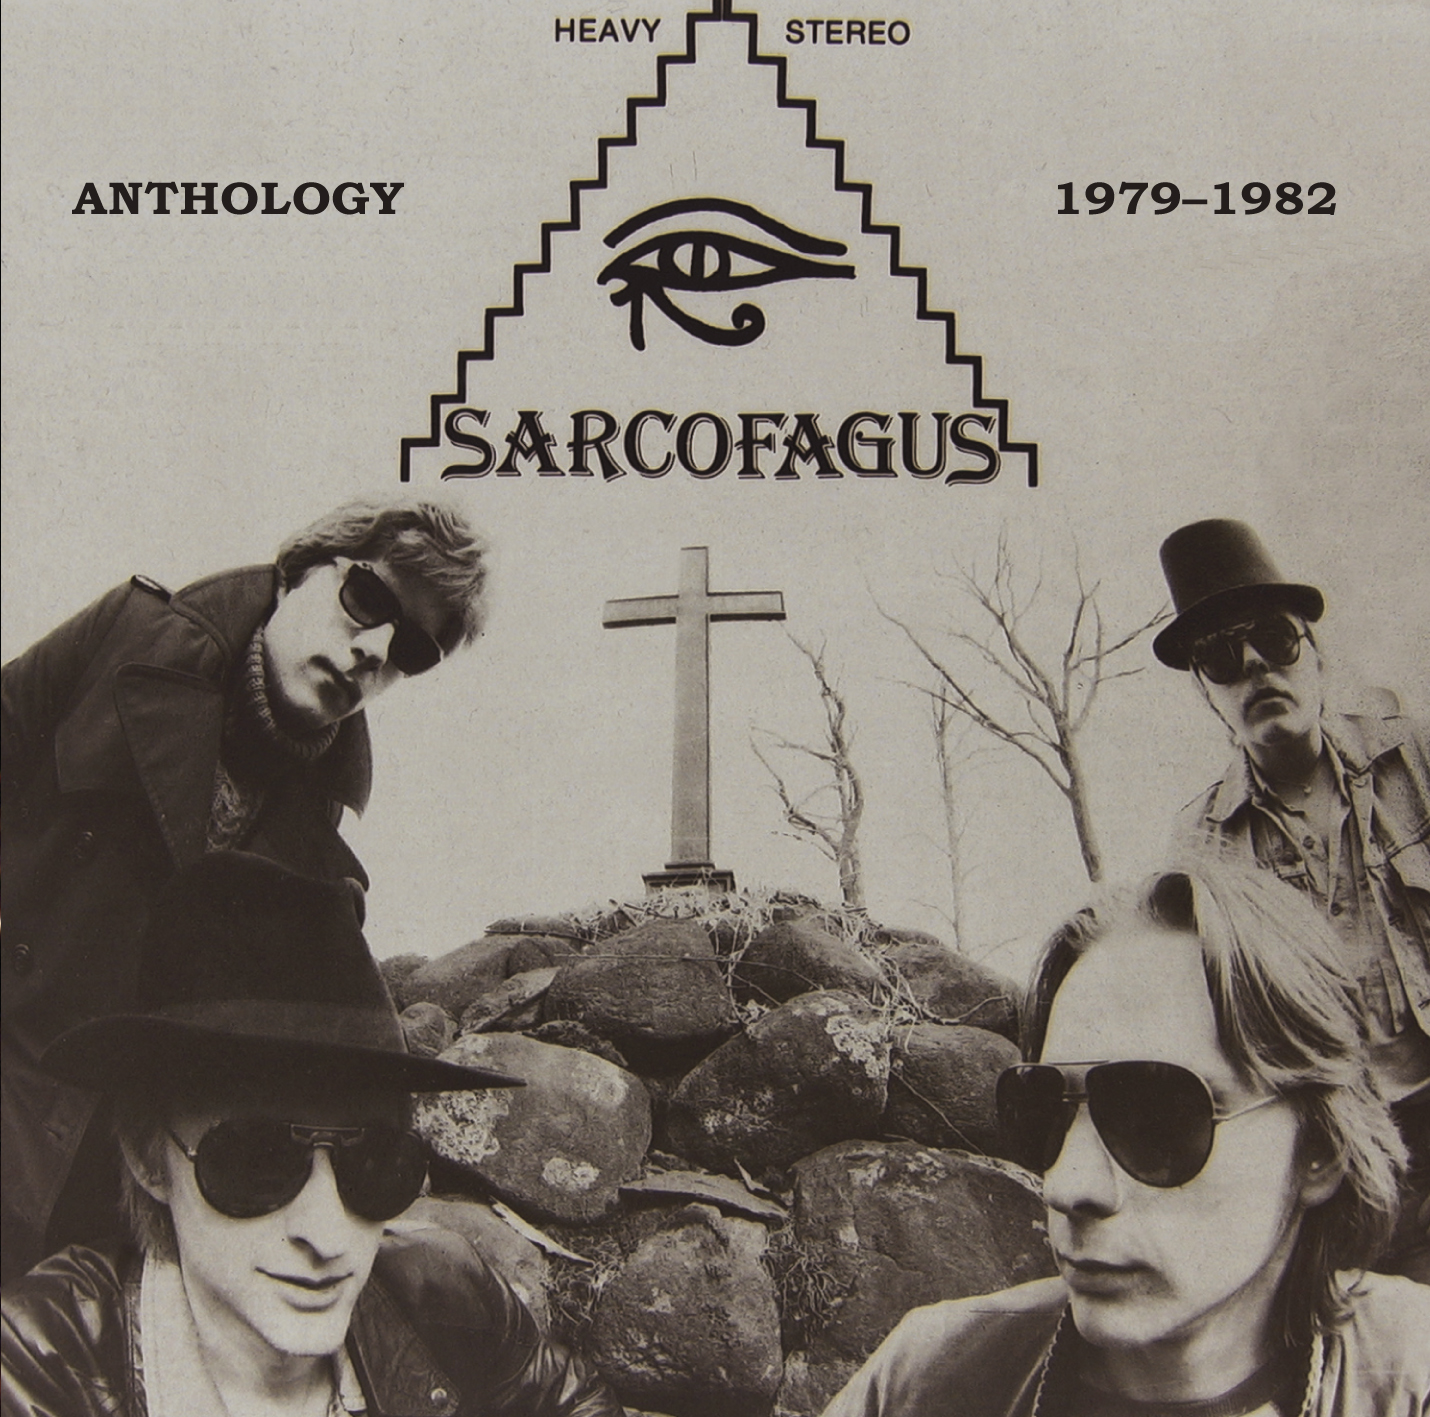 Sarcofagus - Anthology 1979-1982 - 2xCD